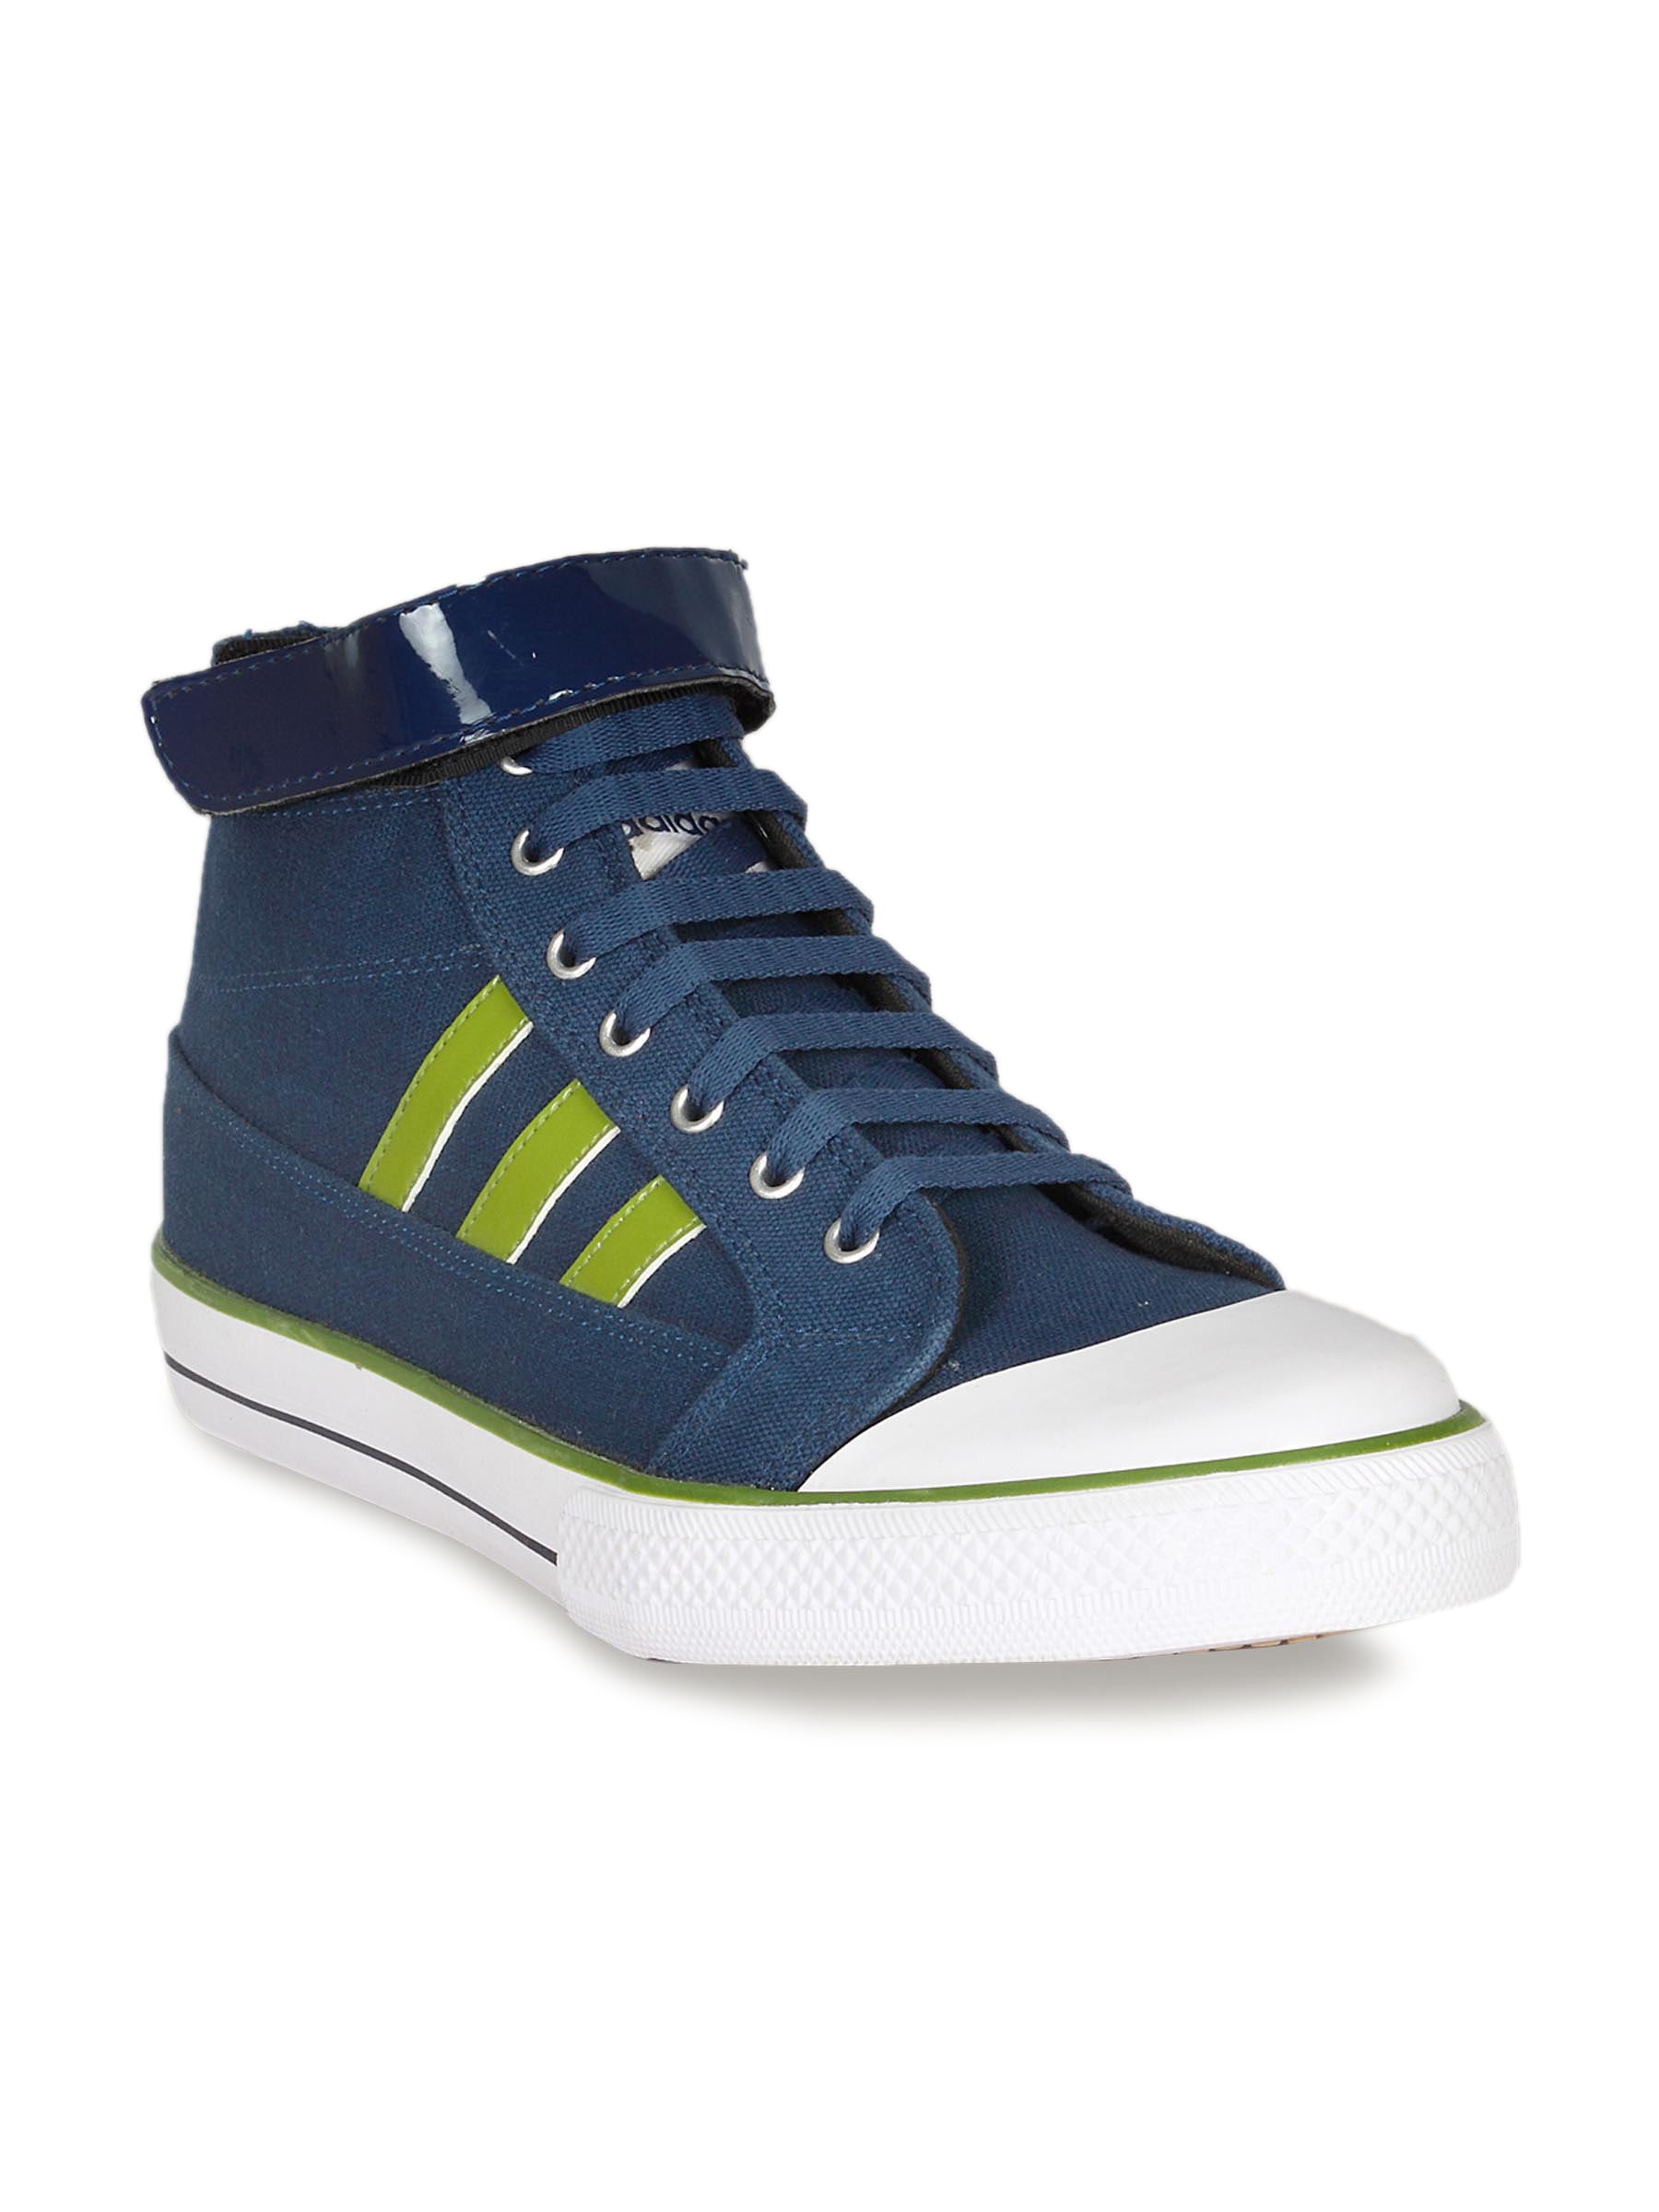 ADIDAS Unisex High Can Blue Shoe